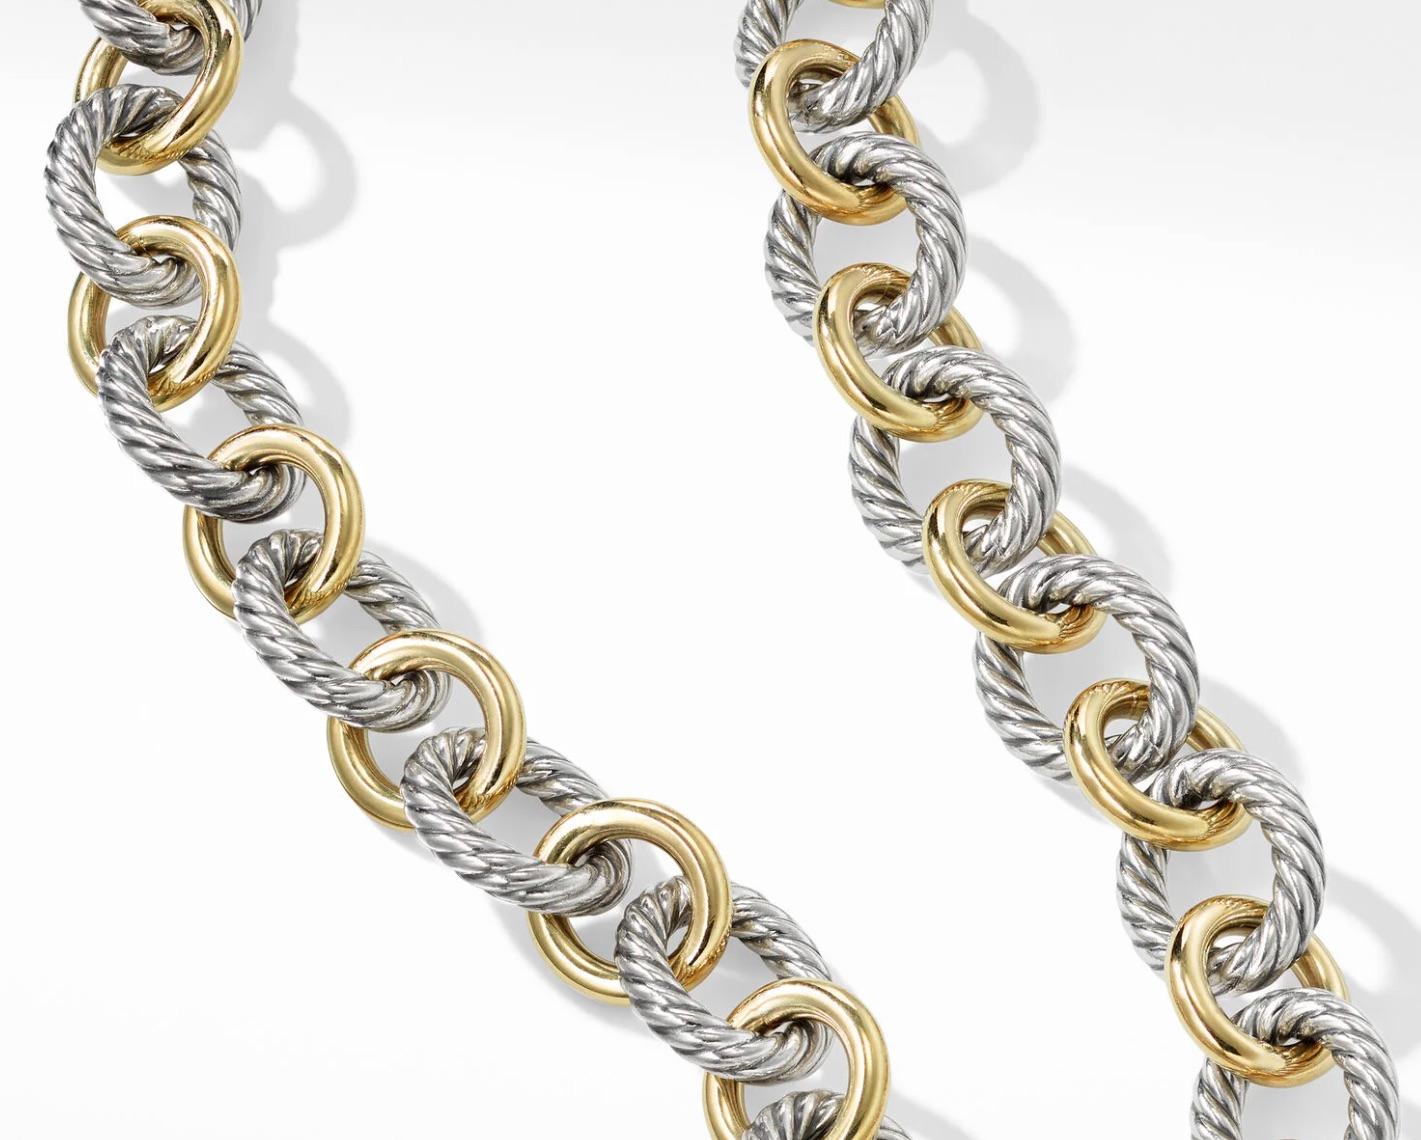 david yurman gold and silver necklace